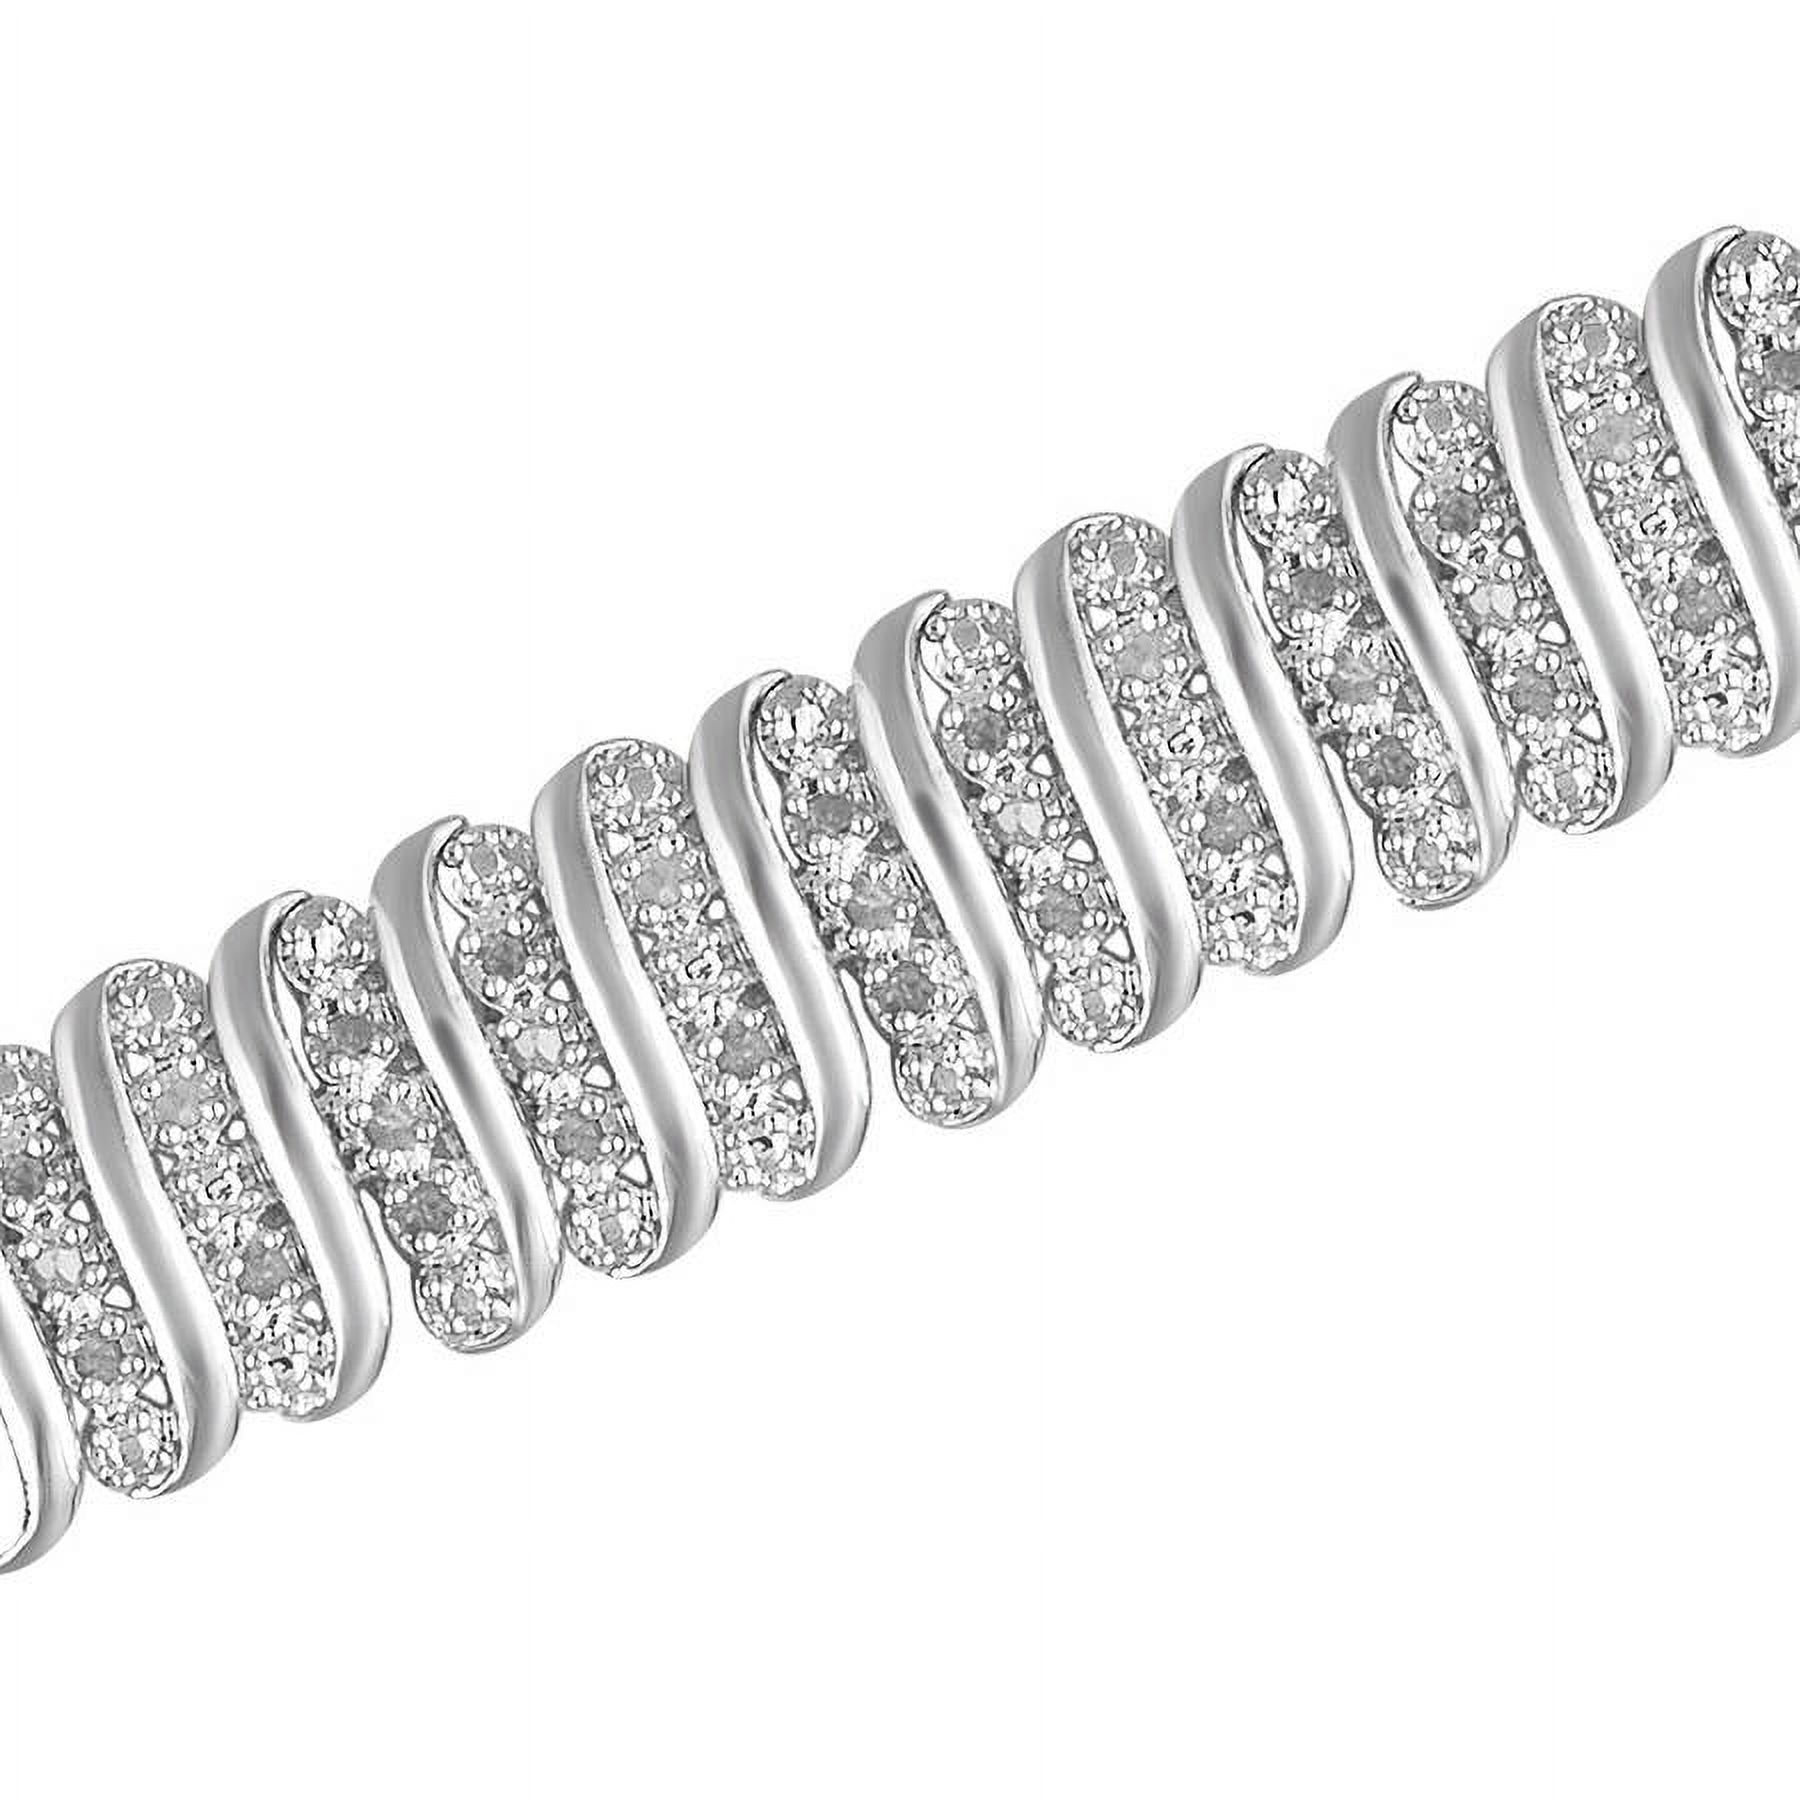 Arista 1.00 ct Round White Diamond Rhodium-Plated Women's Tennis Bracelet in Silver-tone Brass, 7.25" (I-J, I2-I3) - image 2 of 3